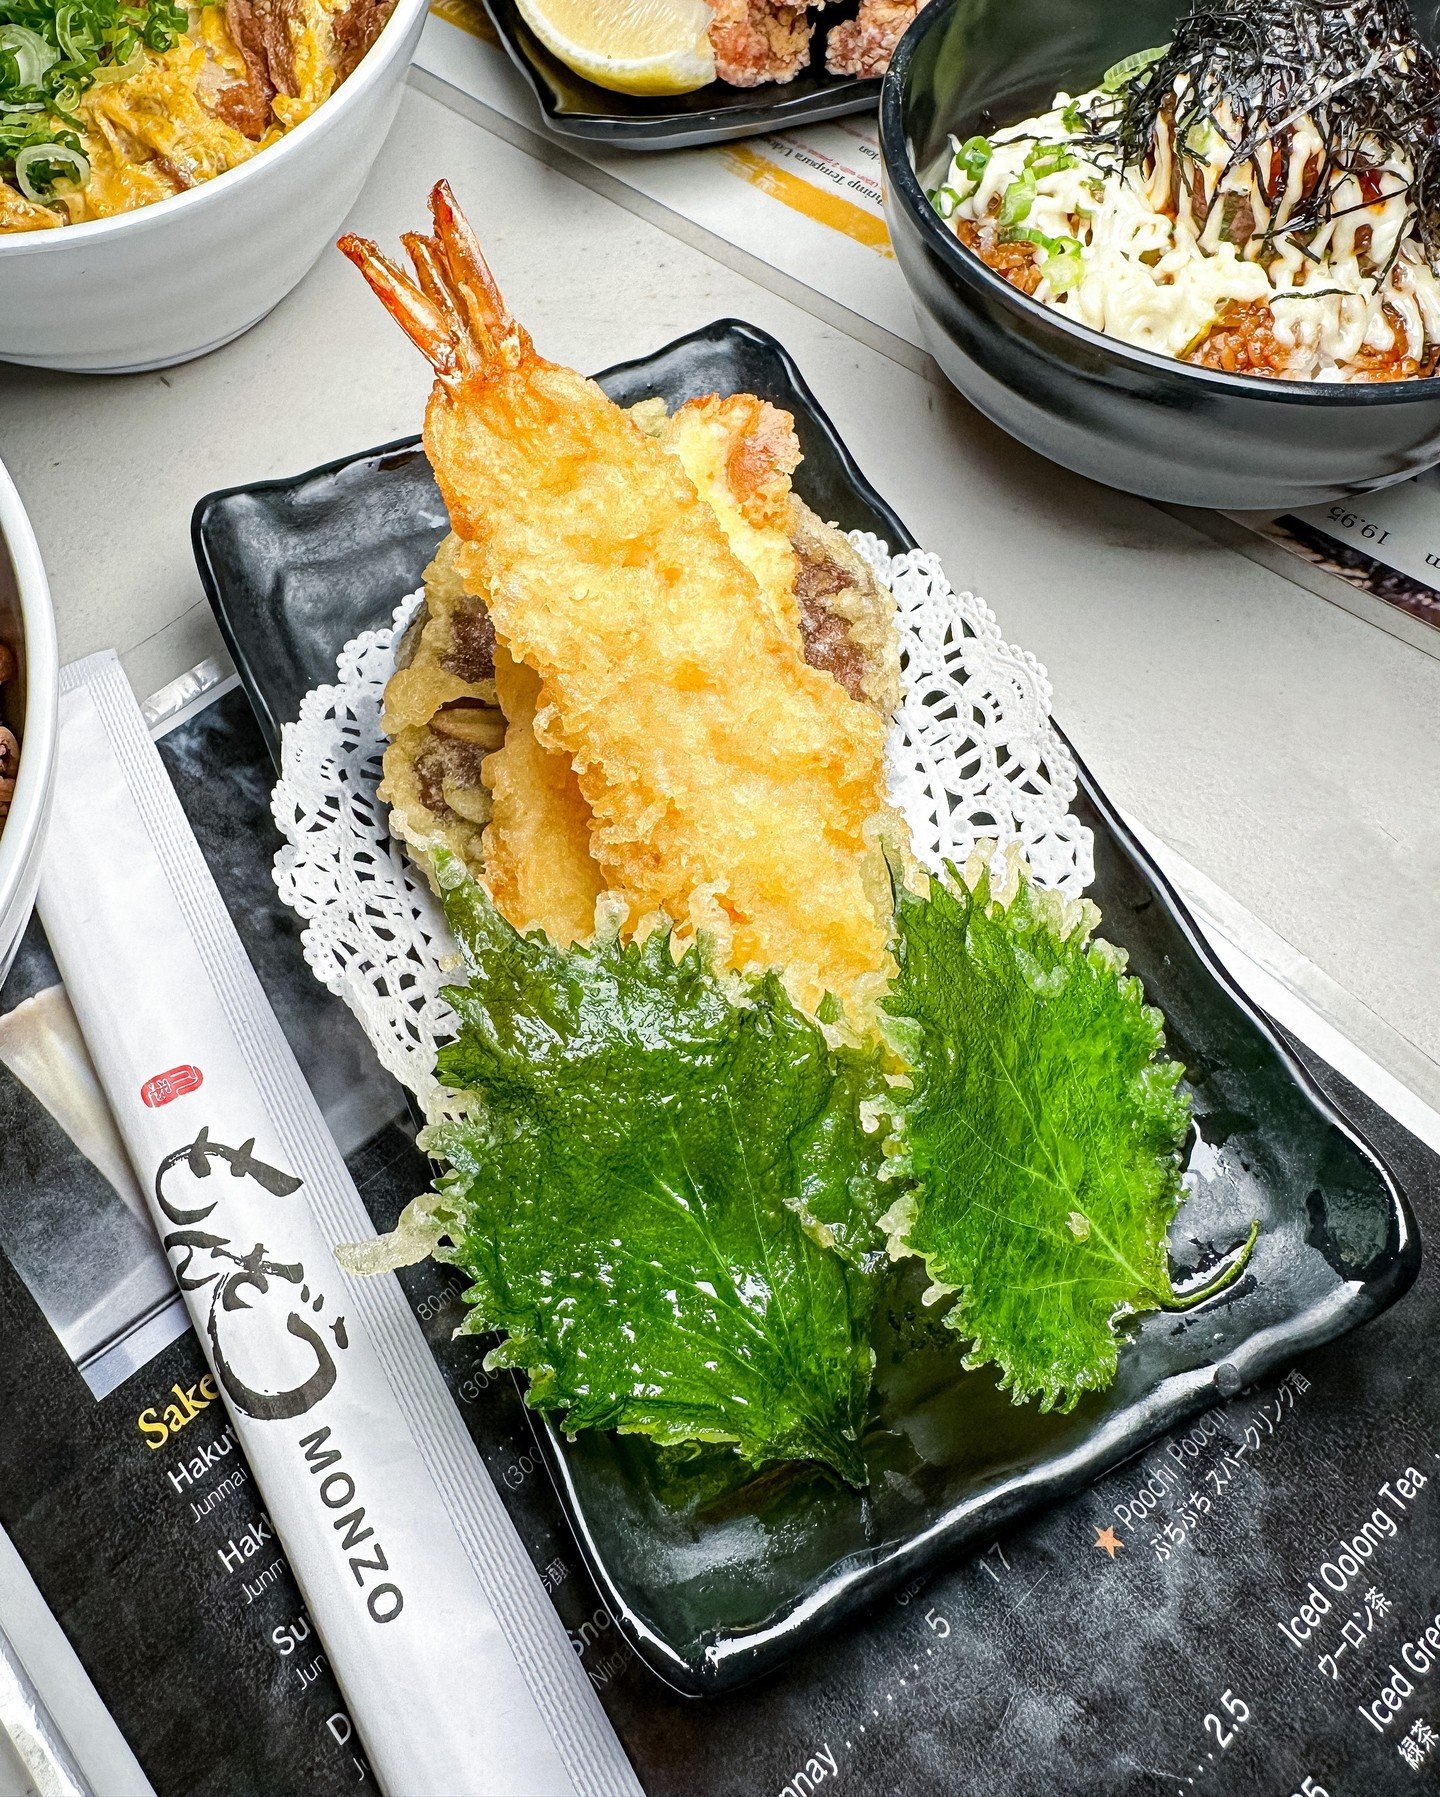 Crunchy, golden perfection awaits: dive into a medley of mixed tempura delights! Visit us today! #LAFoodie 🍤✨ 

👇 Freshly homemade noodles 
◾️◽️◾️◽️◾️◽️◾️◽️◾️◽️
🍜 ᴍᴀʀᴜɢᴀᴍᴇ ᴍᴏɴᴢᴏ ʟᴀ
⏰ ᴍᴏɴ - ᴛʜᴜʀꜱ : 11:30 ᴀᴍ - 9:00 ᴘᴍ 
⏰ ꜰʀɪ - ꜱᴜɴ: 11:30 ᴀᴍ - 10:00 